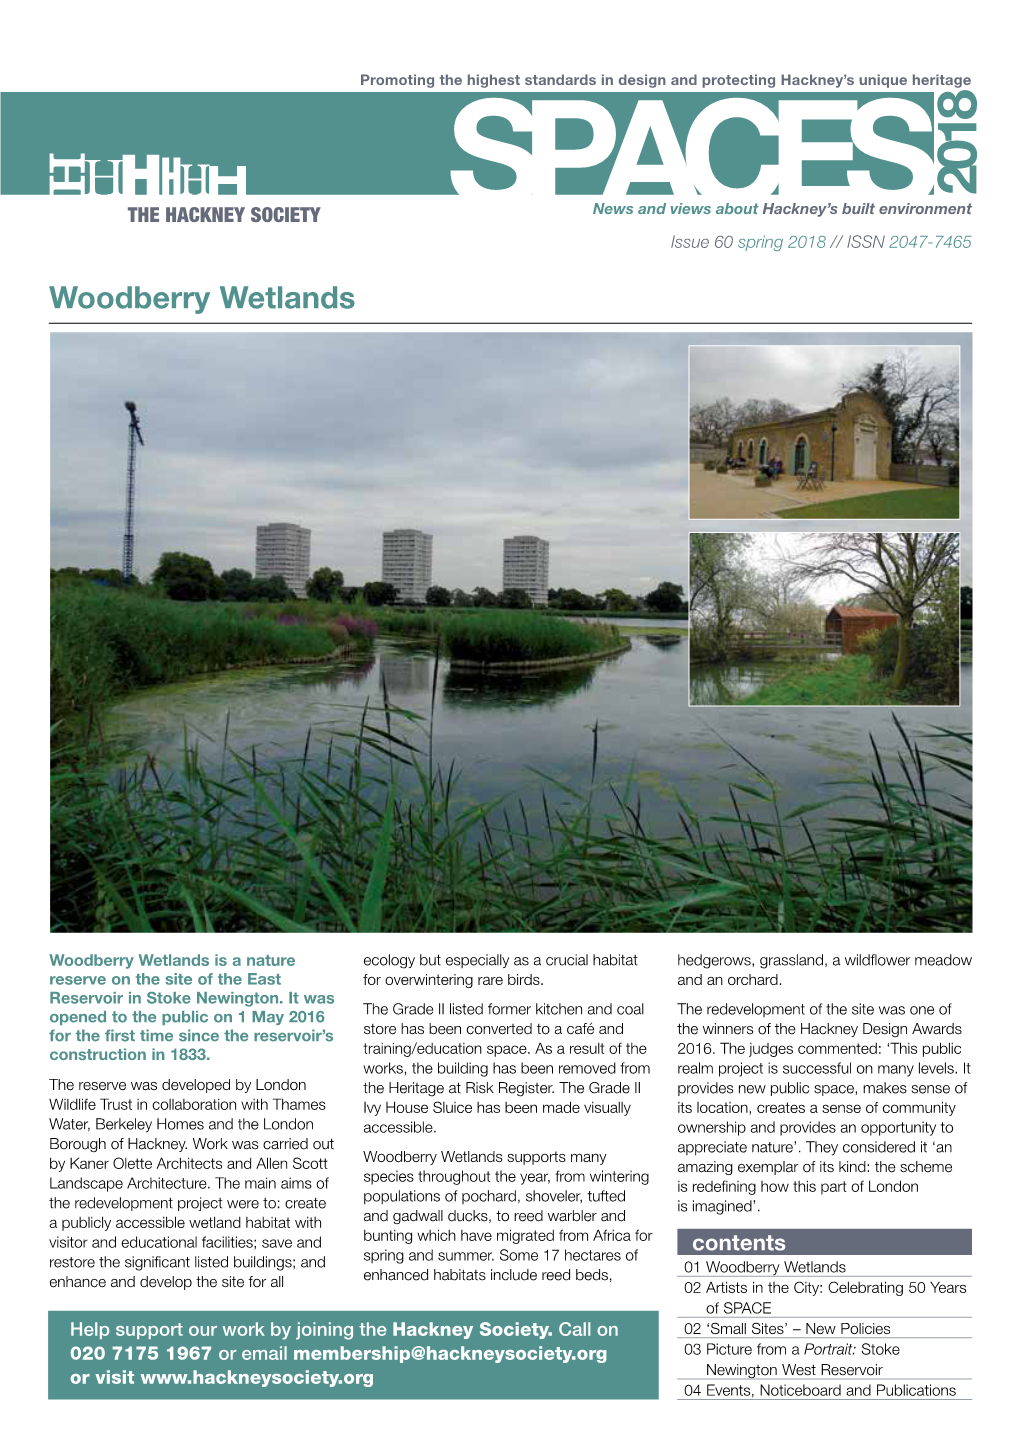 Woodberry Wetlands